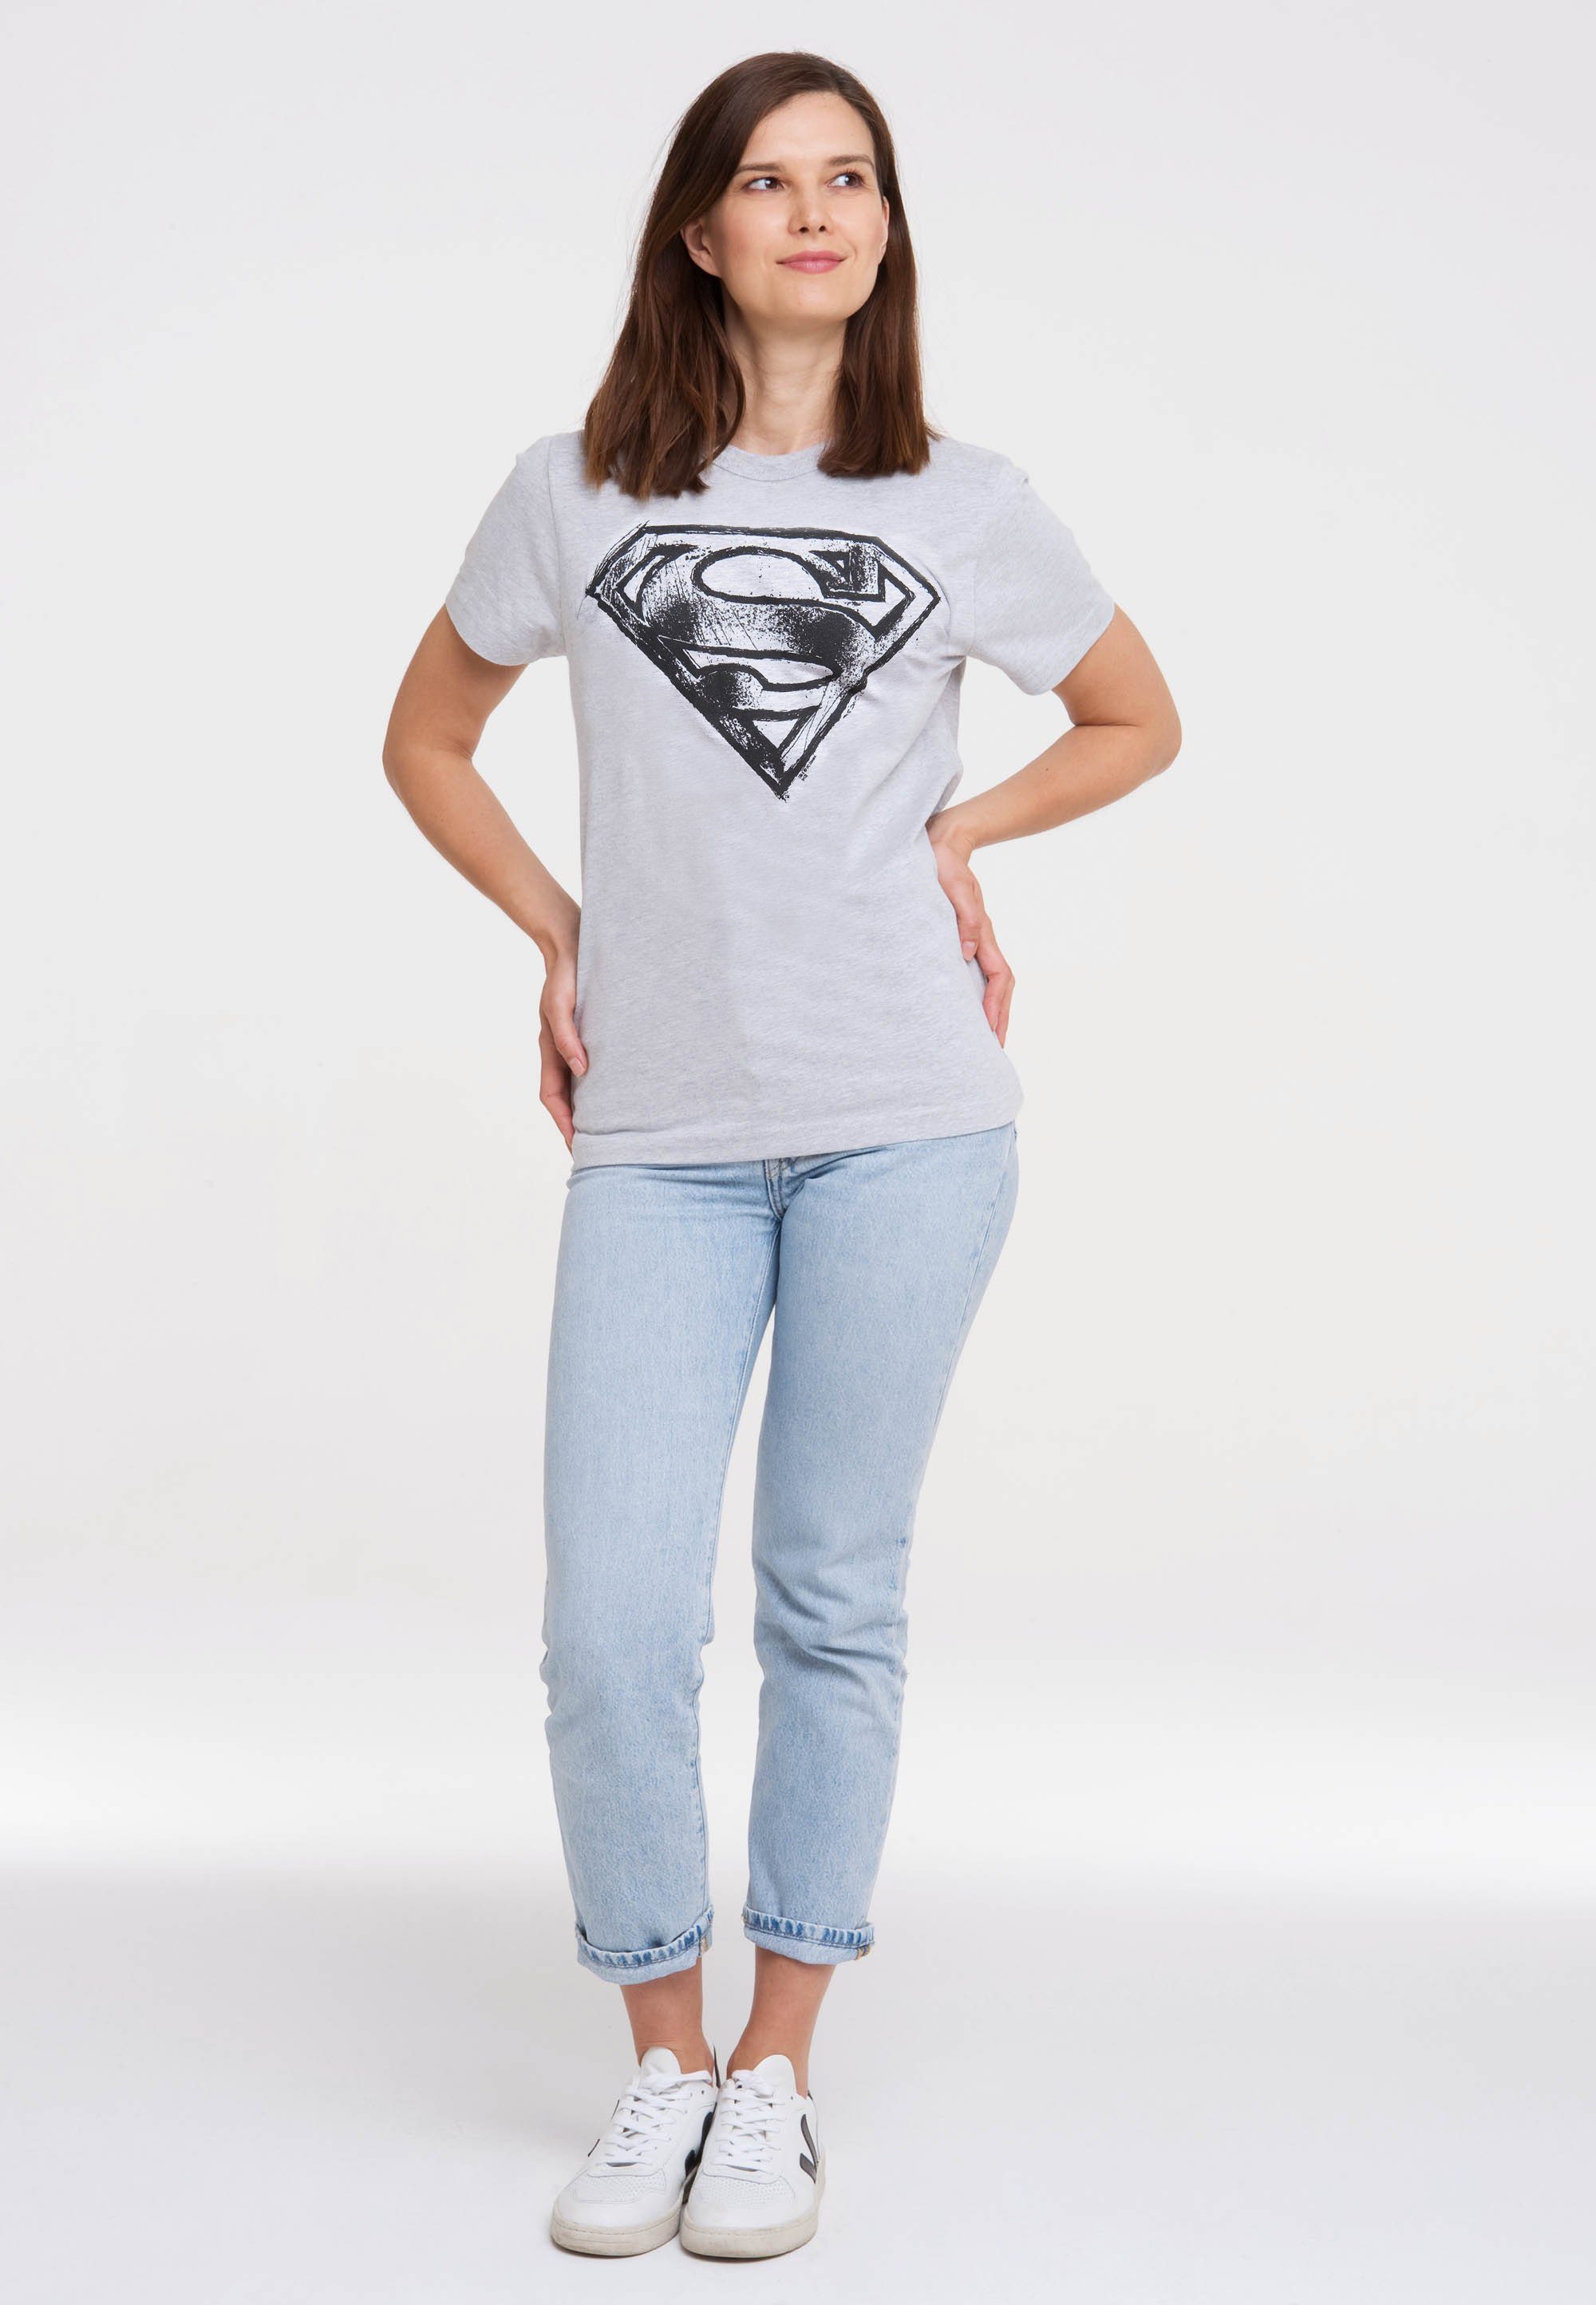 trendigem Superman LOGOSHIRT Superhelden-Print mit Scribble Logo T-Shirt